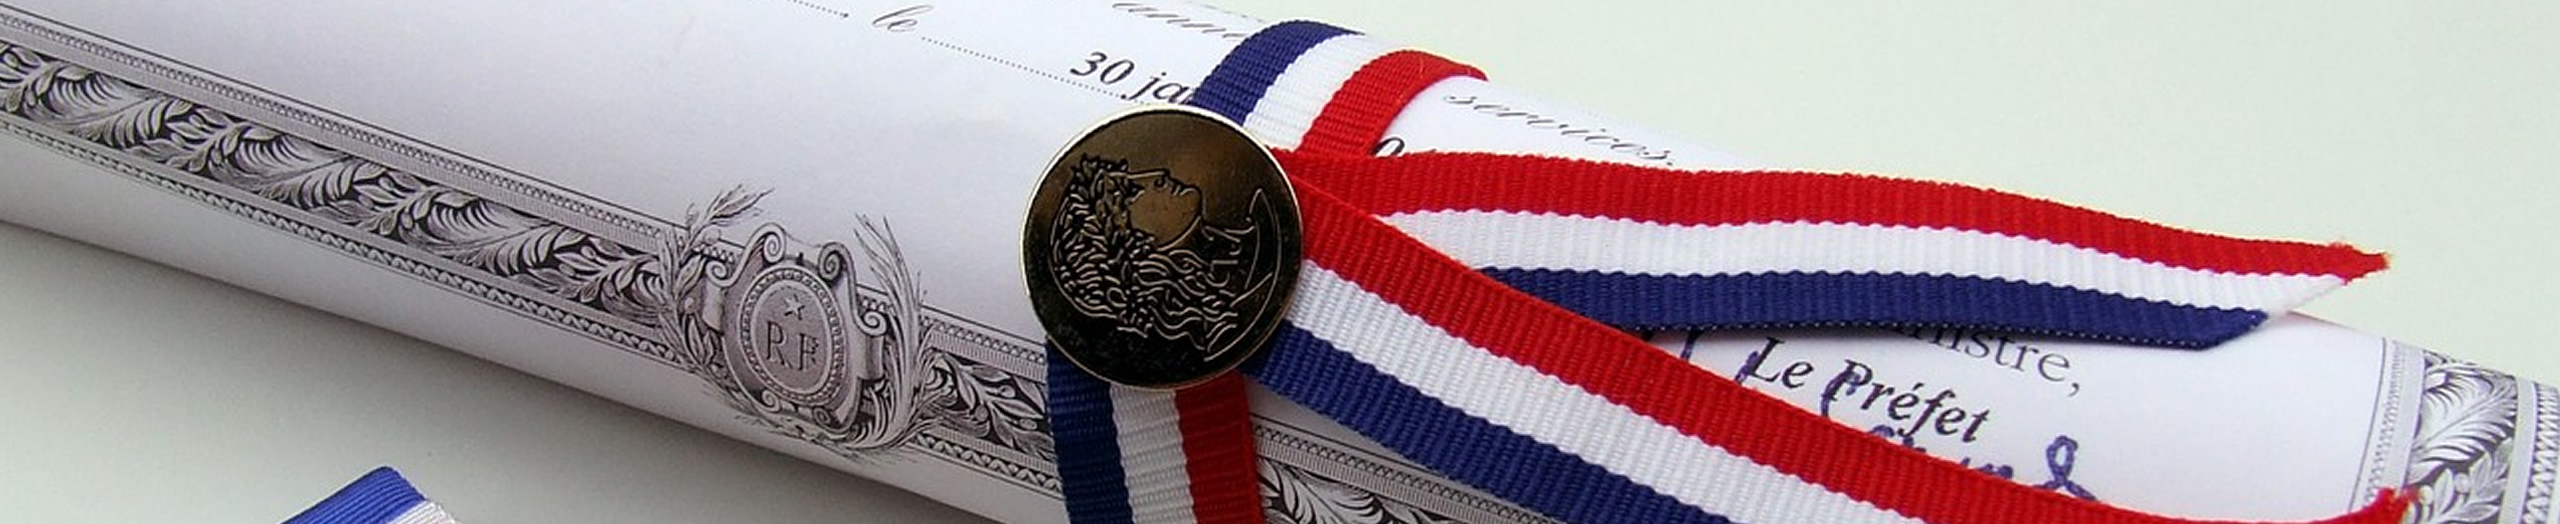 medaille_fond